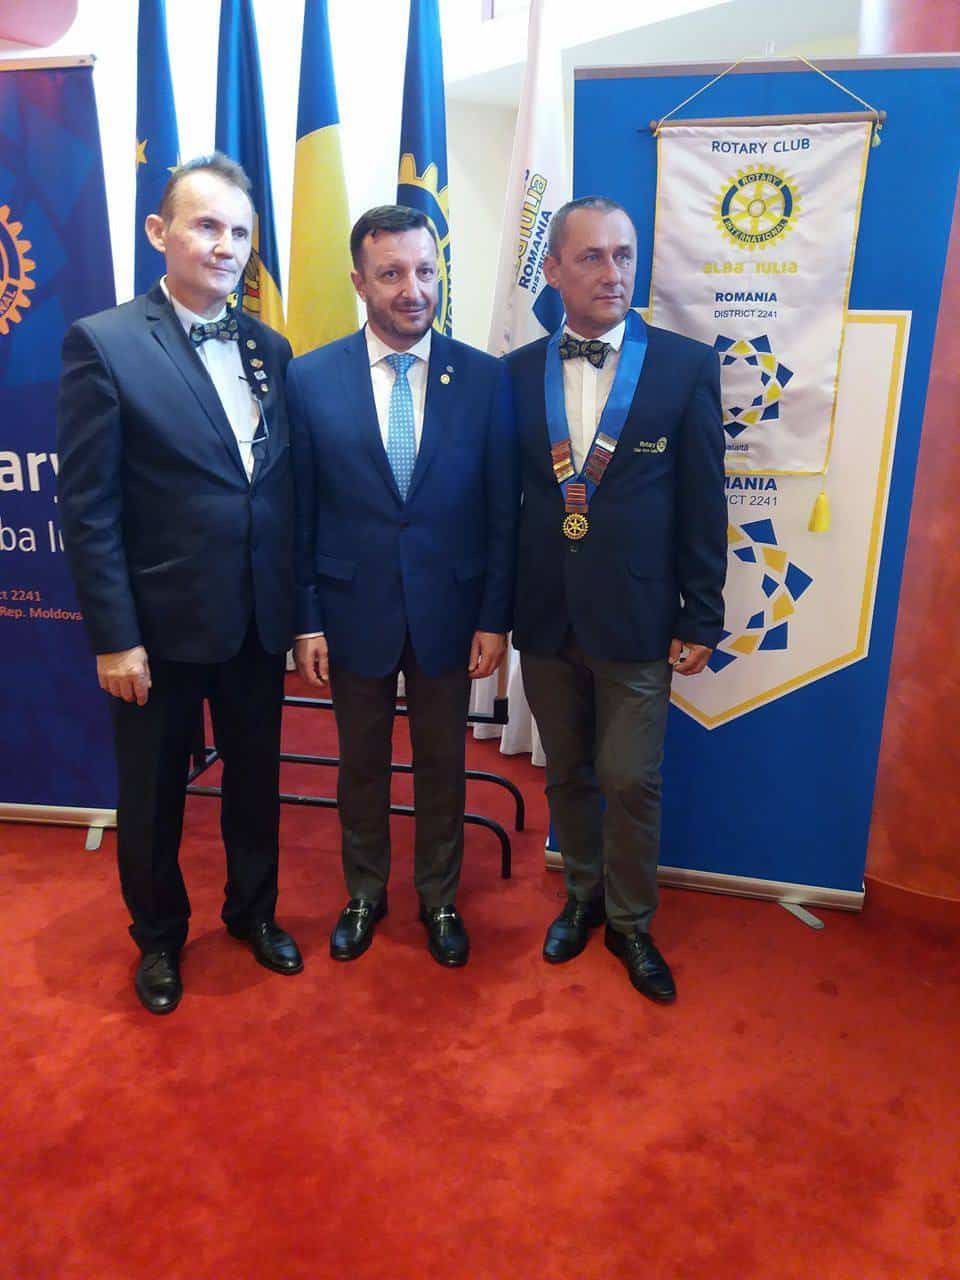 Rotary Club Cluj-Napoca, Romania